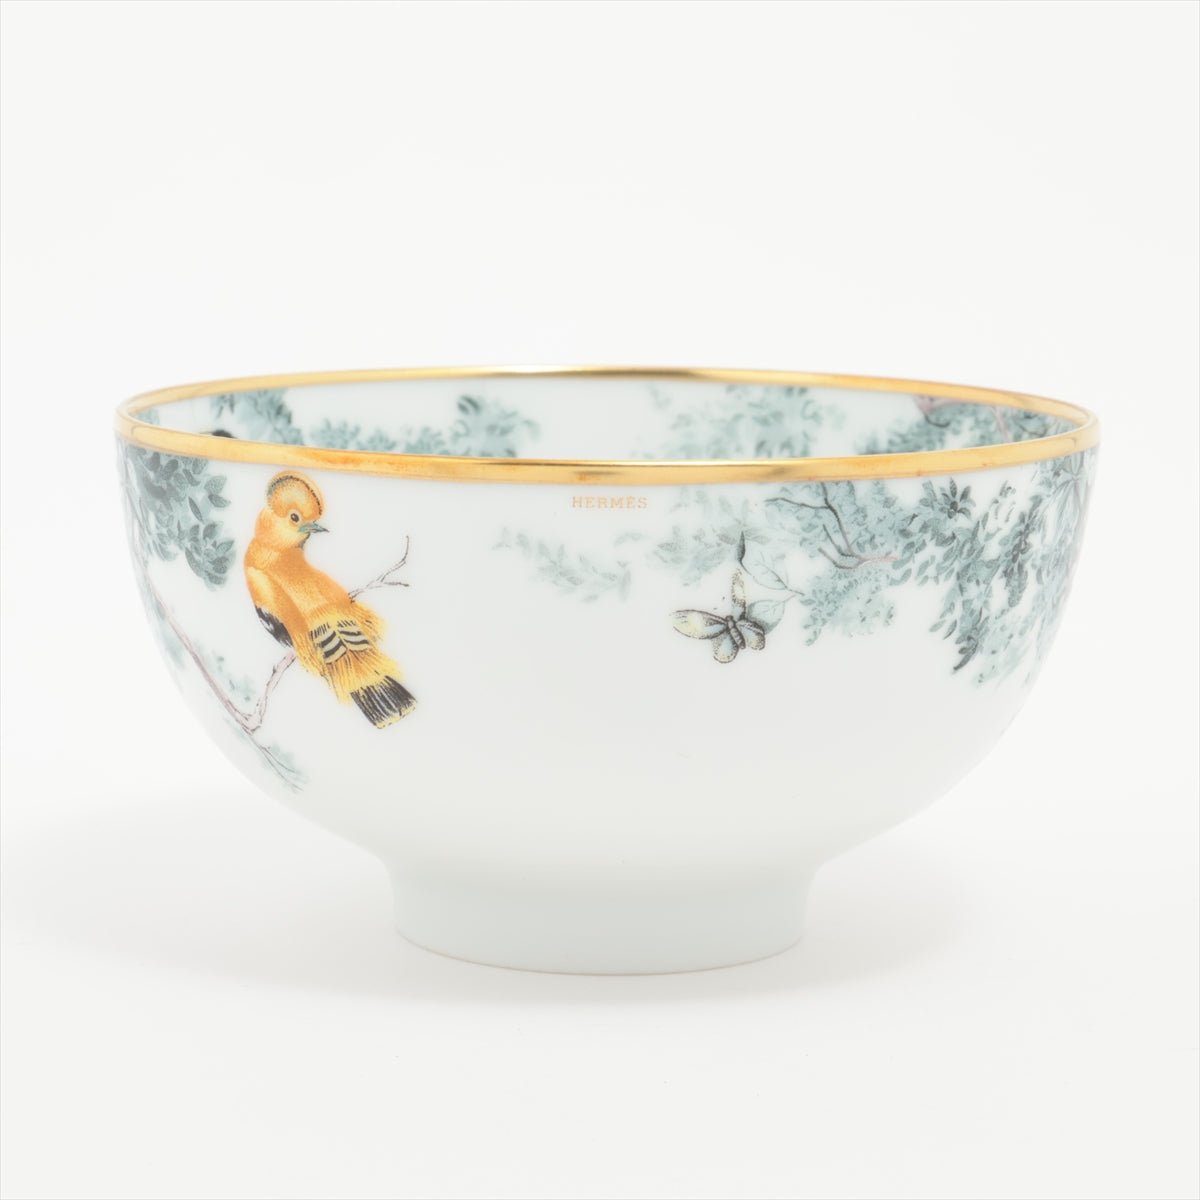 Hermès Carnets deQuaTur (sketch just below the equator) bowls Ceramic Gold